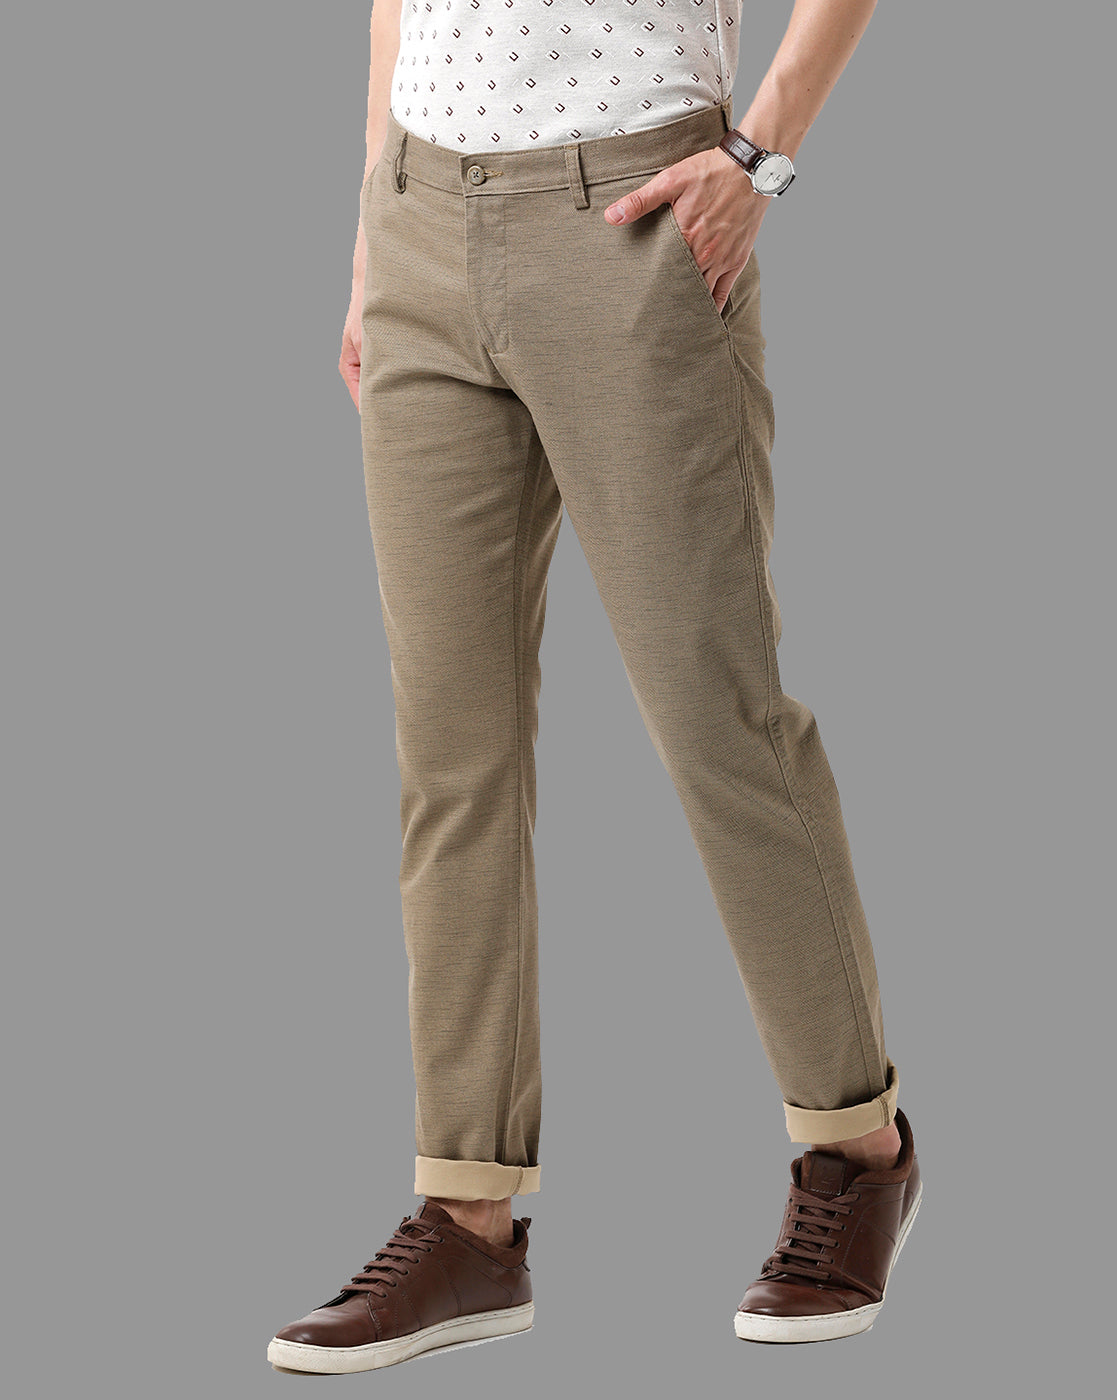 Men's Skinny Fit Smart Trousers | River Island